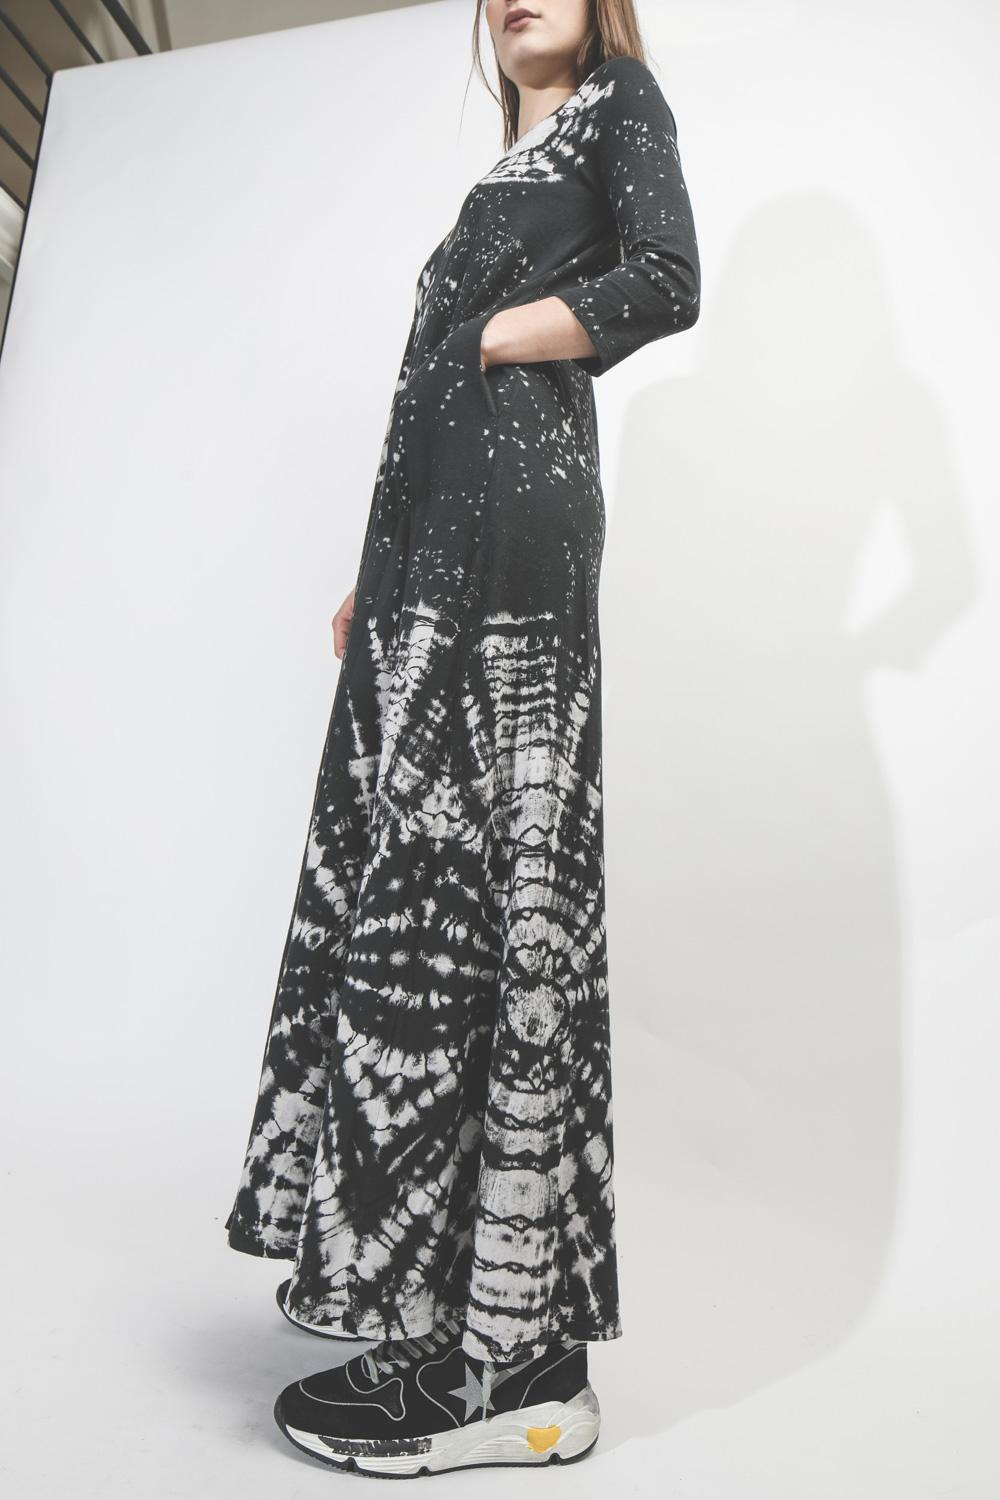 Femme Allegra Maxi Half Black Dress Tie Raquel Dye - Sleeve pour Constellation Drama